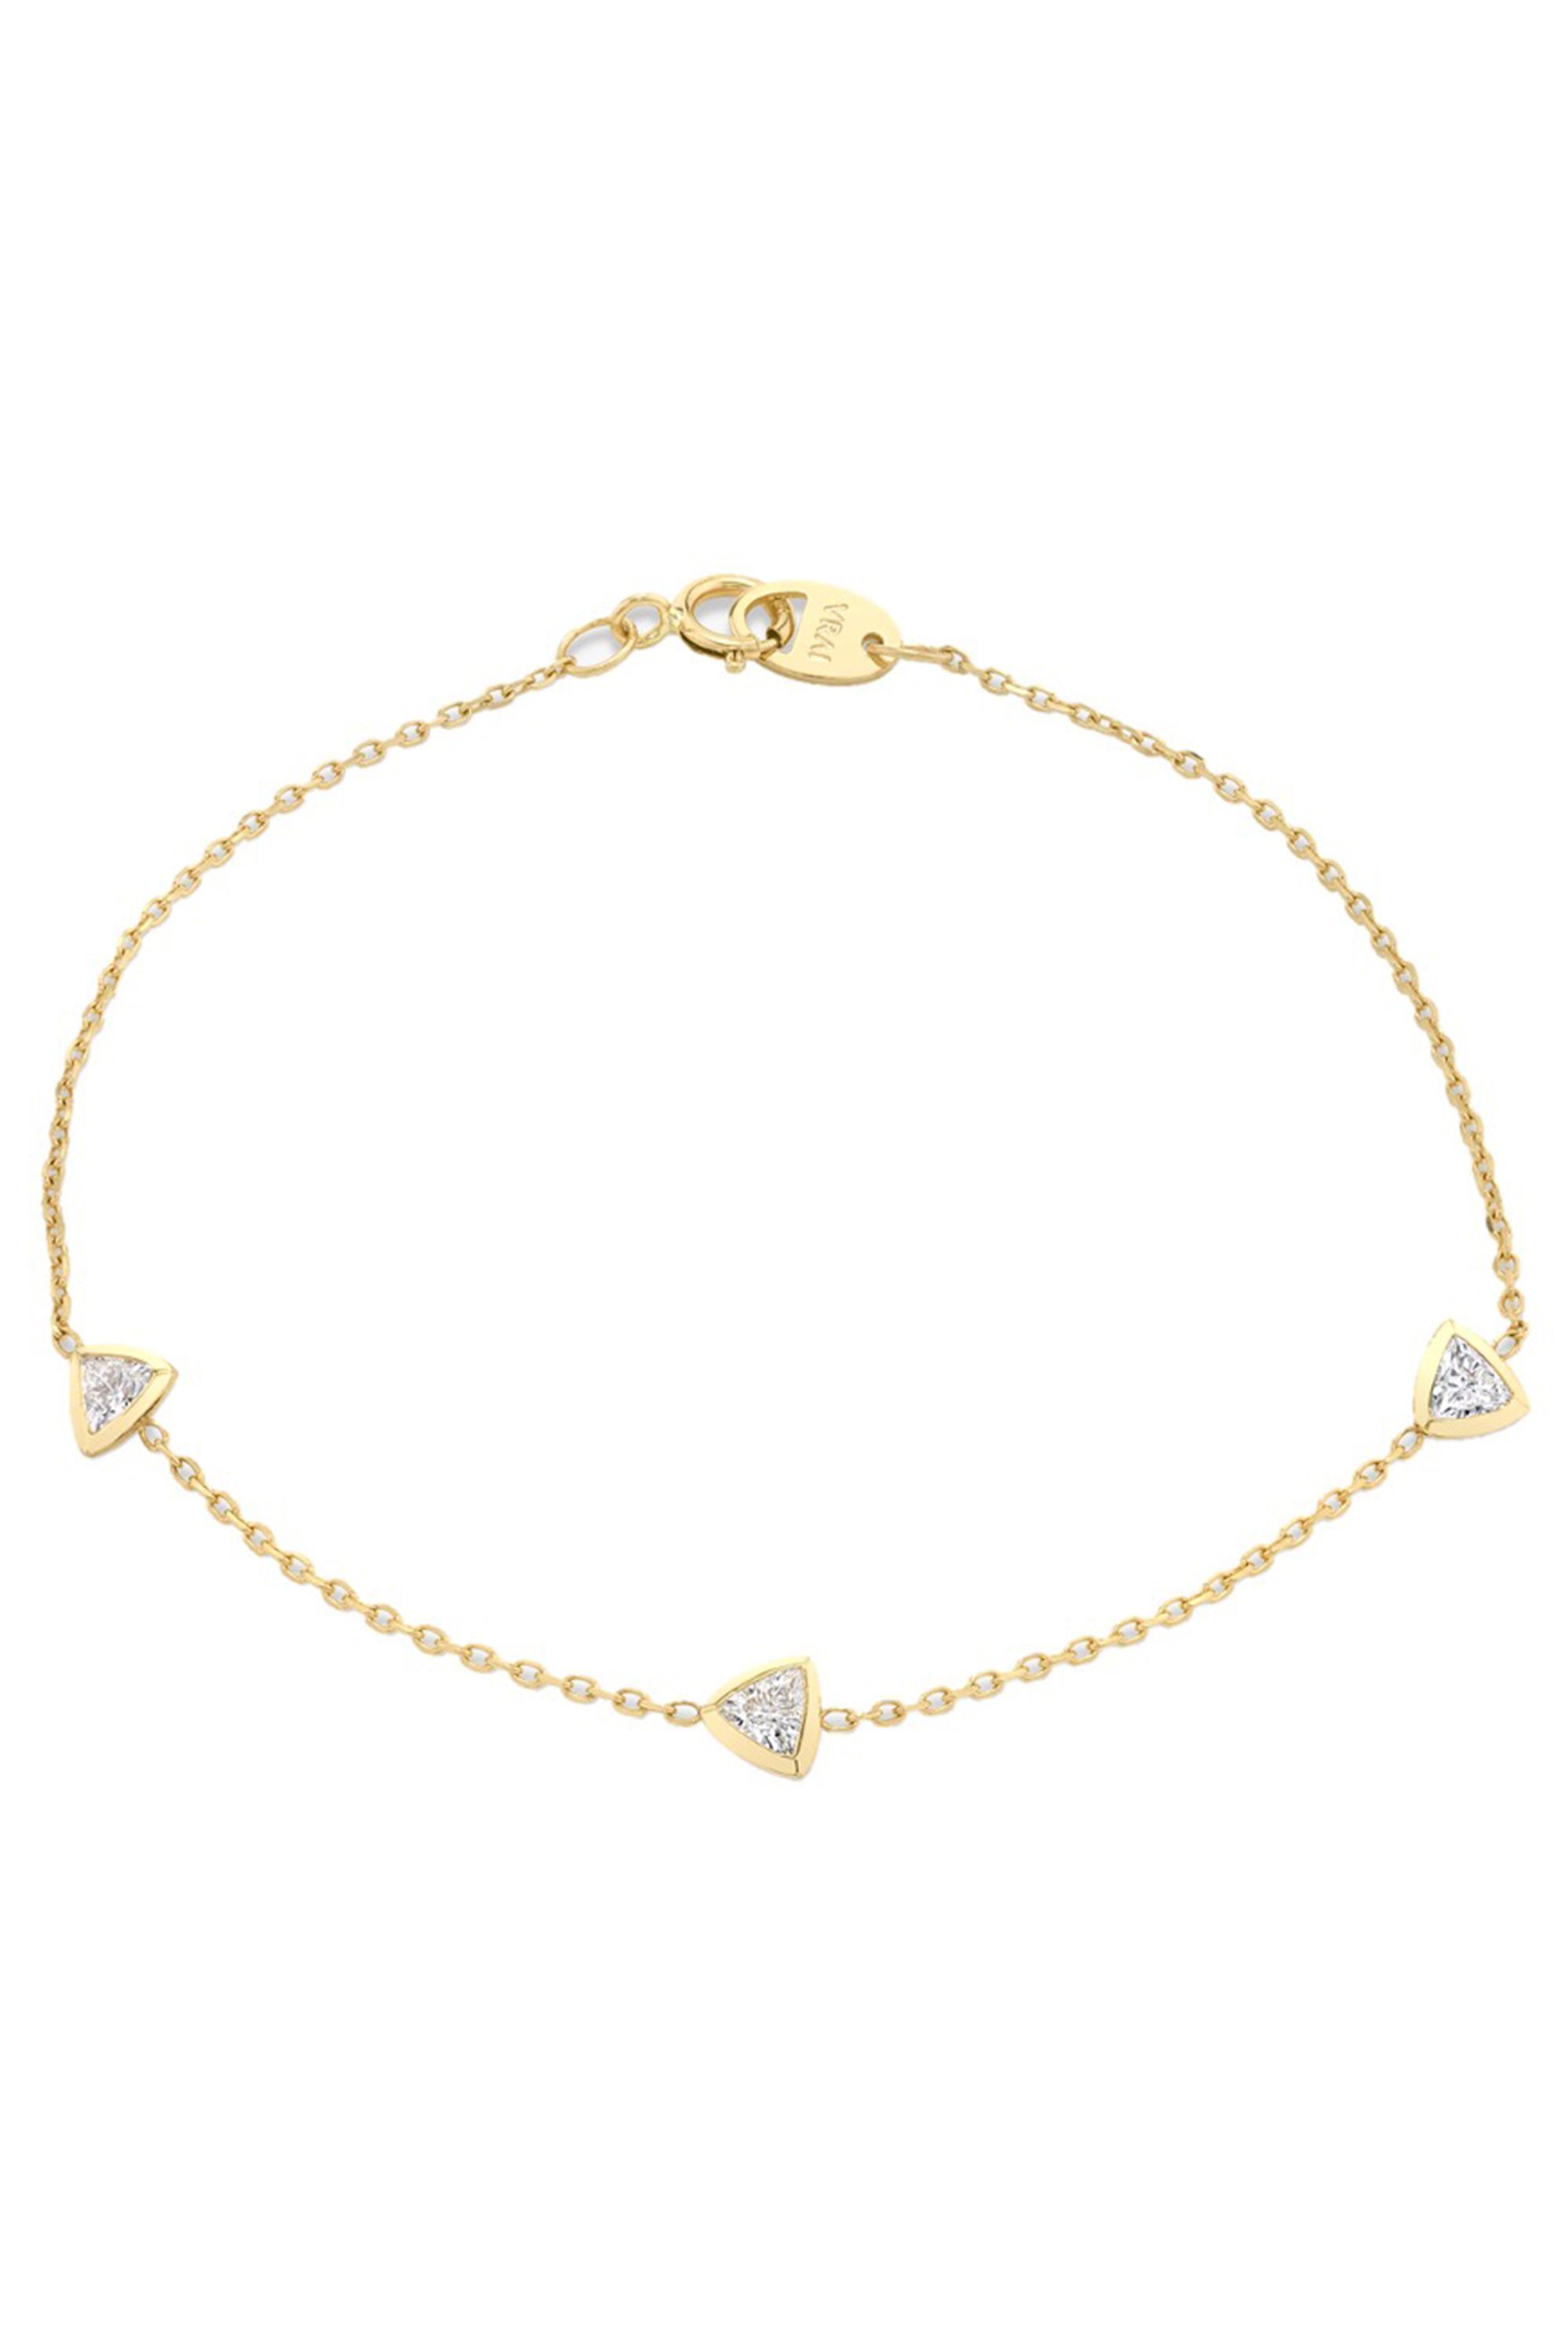 1 Gram Gold - Owal Shape Delicate Design Gold Plated Bracelet for Men -  Style B732 – Soni Fashion®